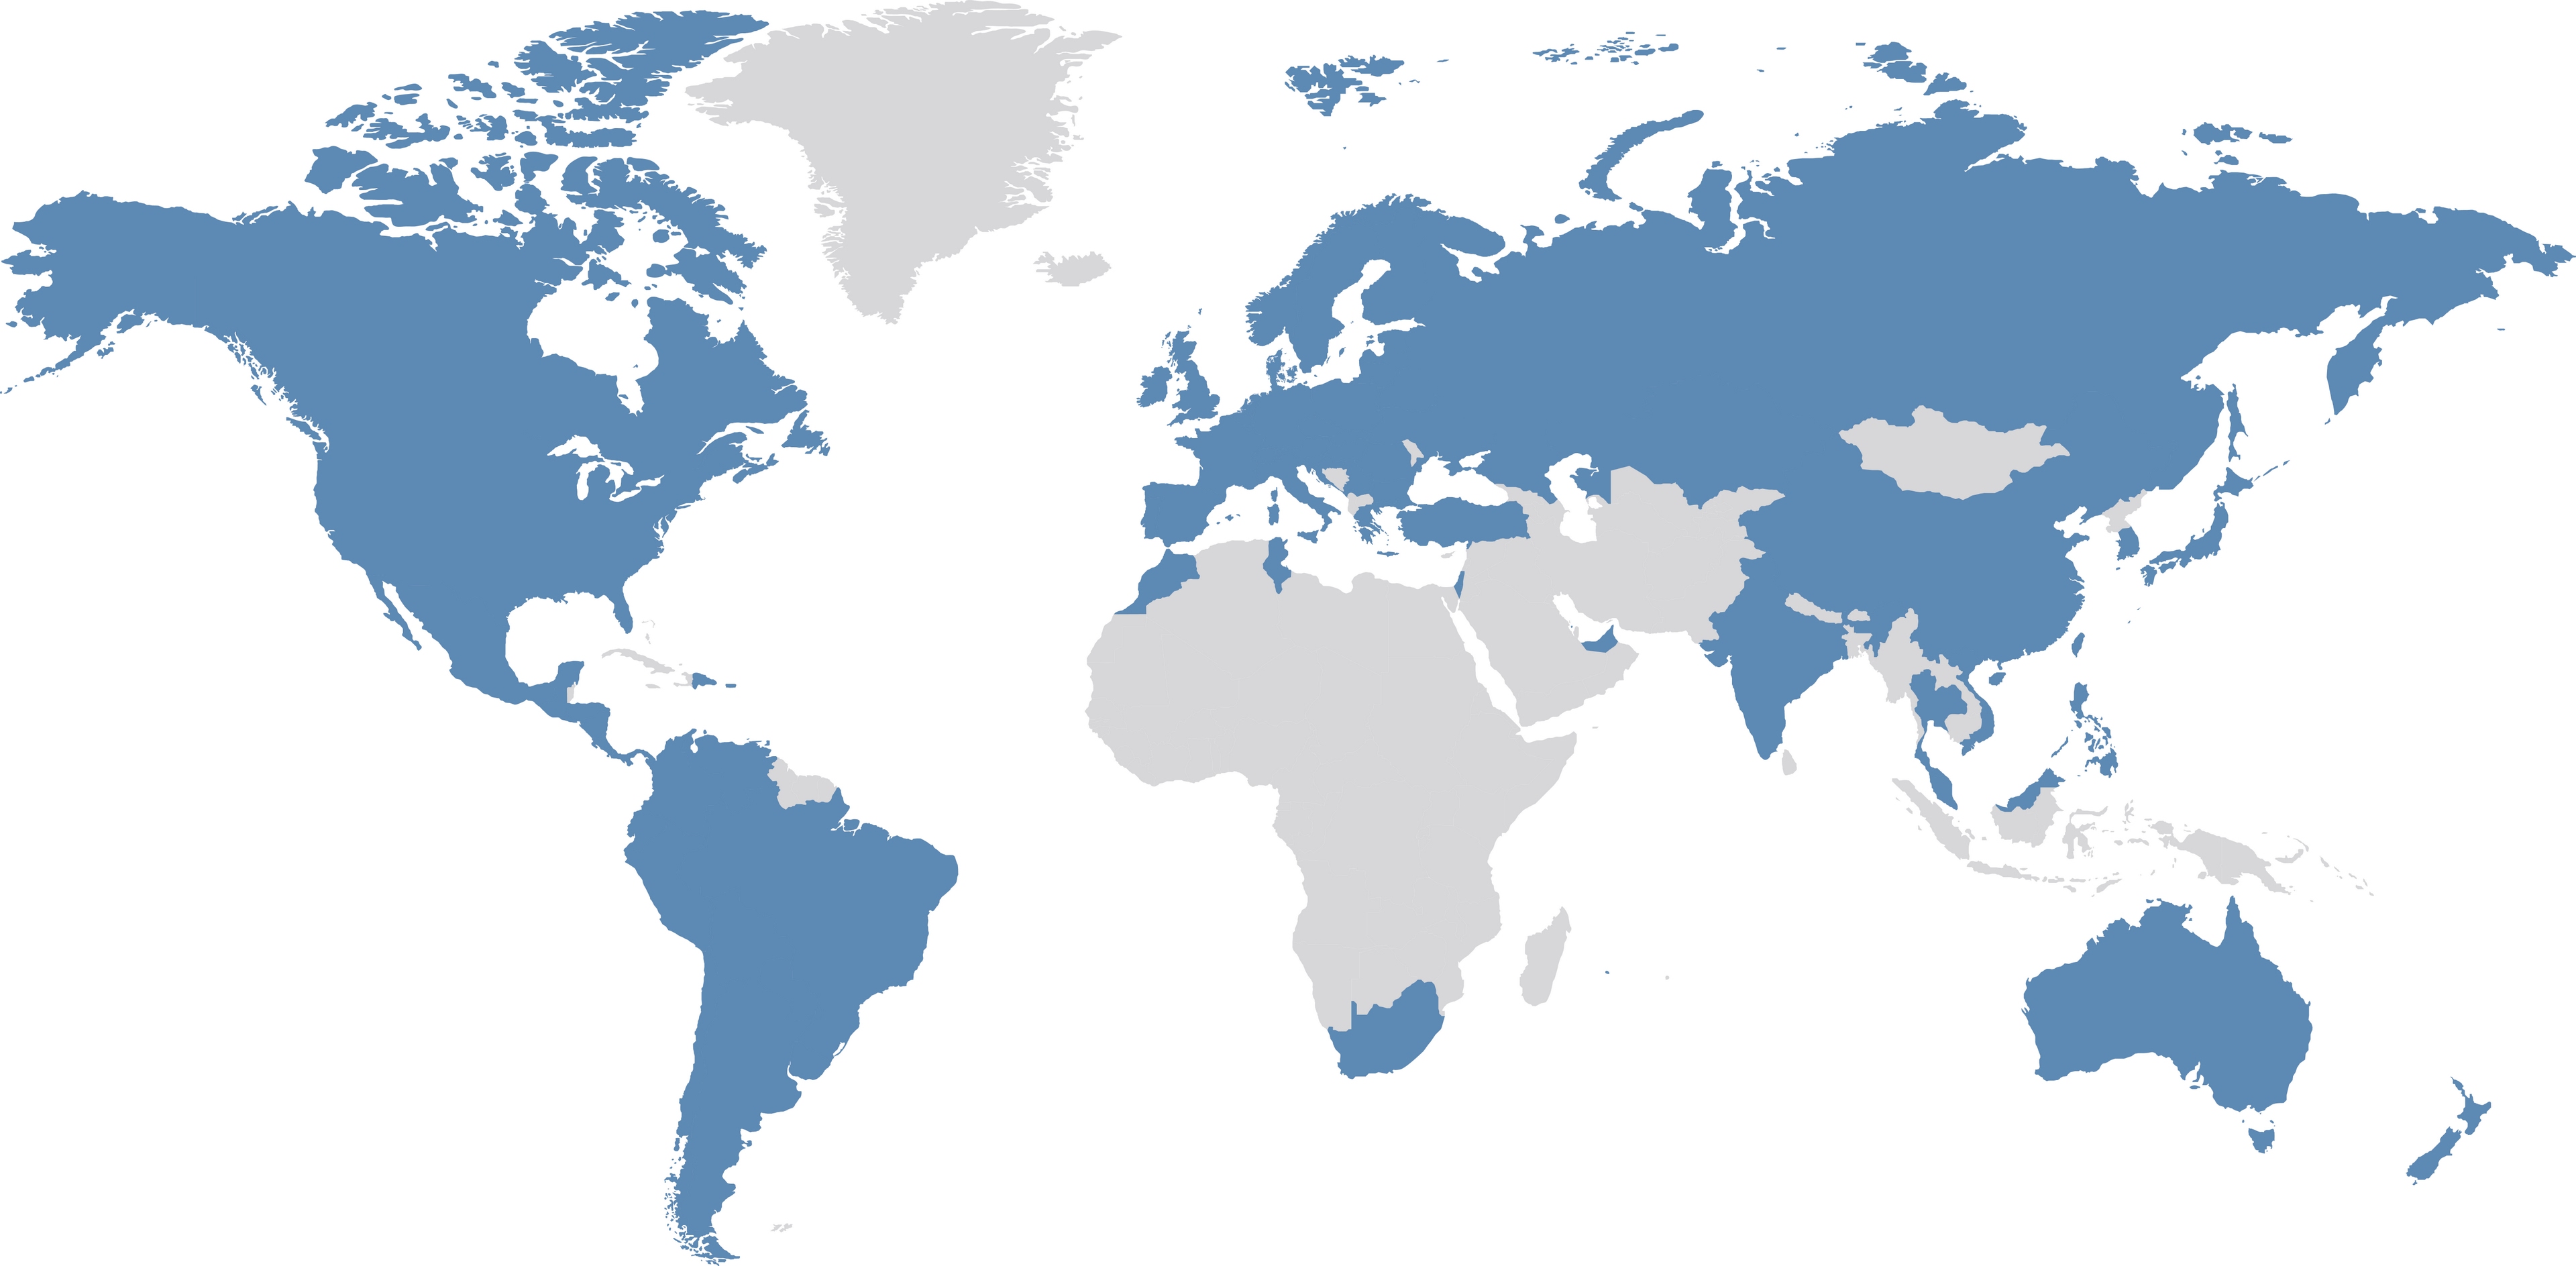 revisedmgworldmap02.jpg